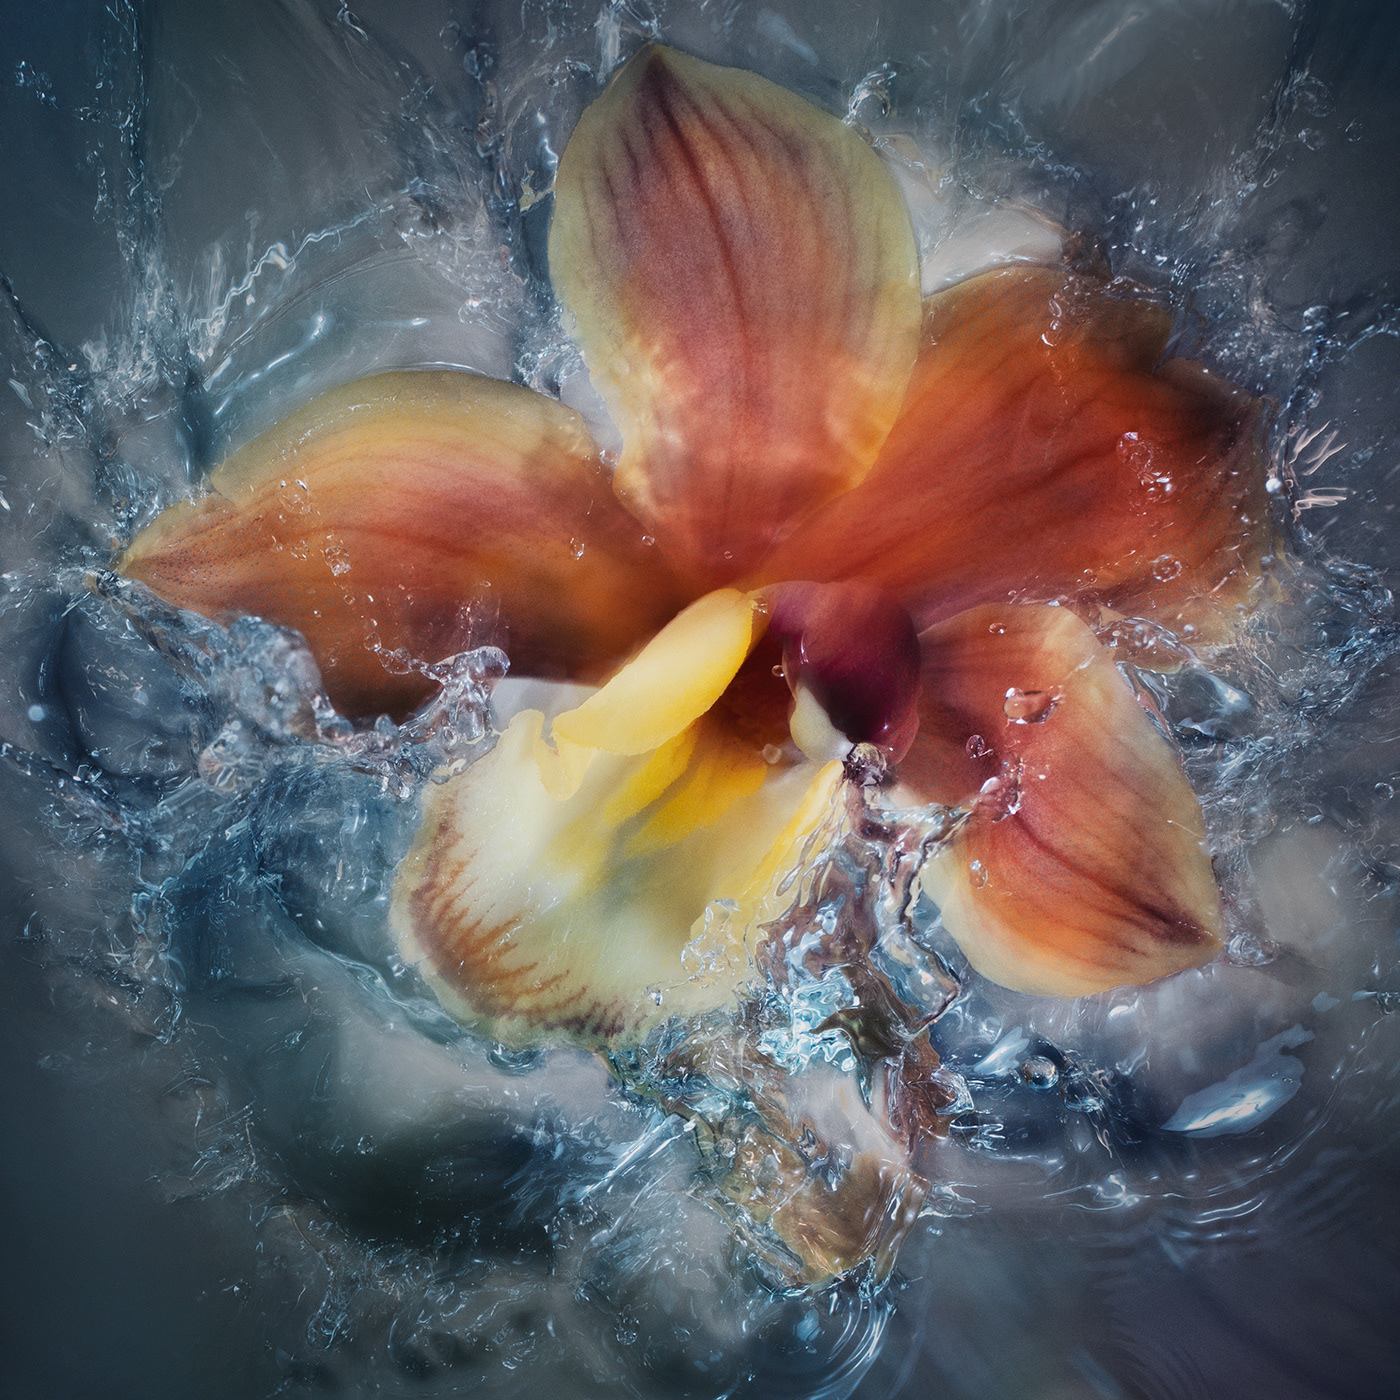 bloem flower flower in water flowerphoto flowerpower Flowers flowerstill splashes studio water